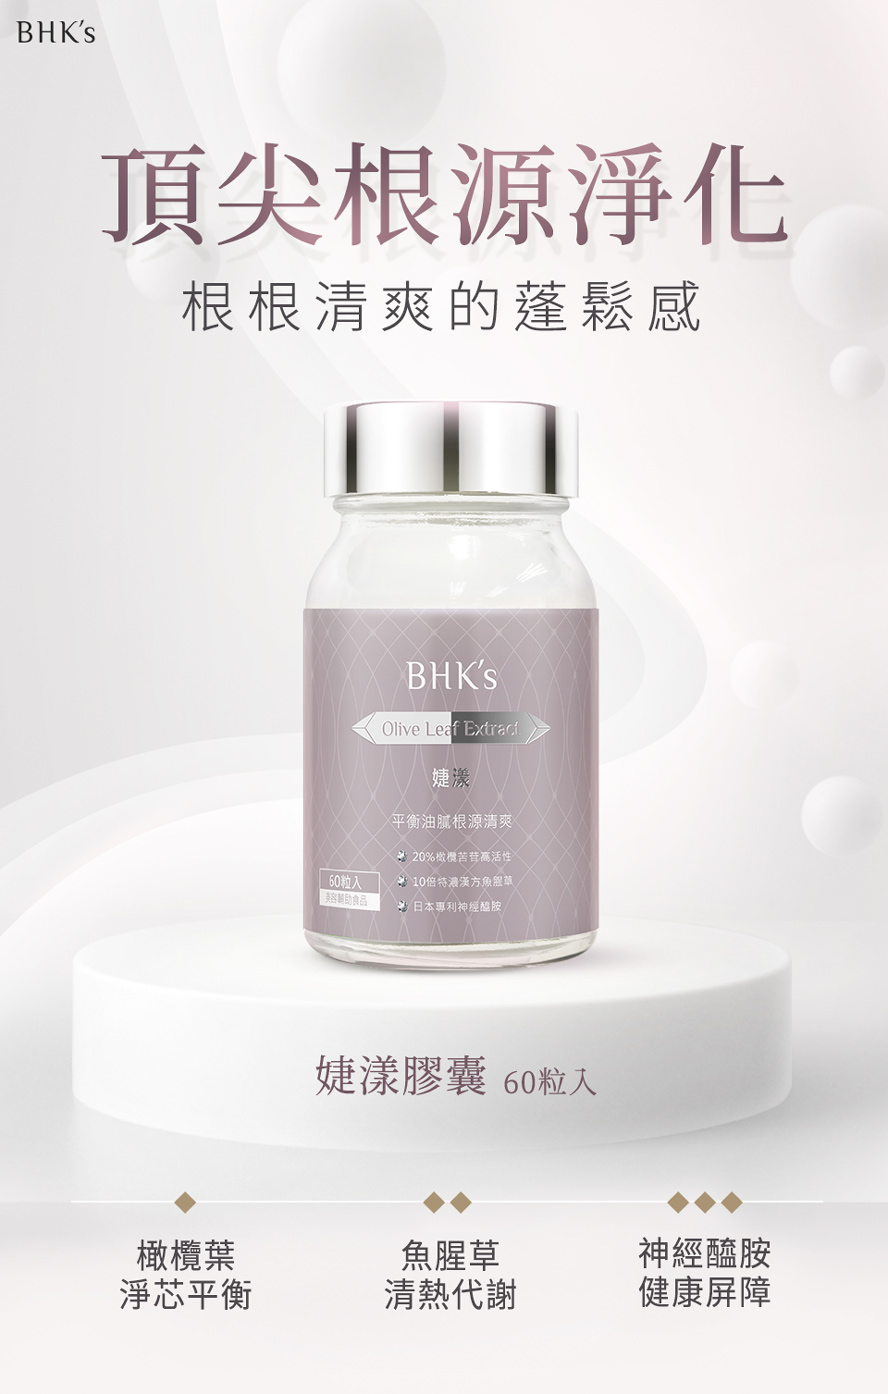 BHK's婕漾膠囊產品介紹。